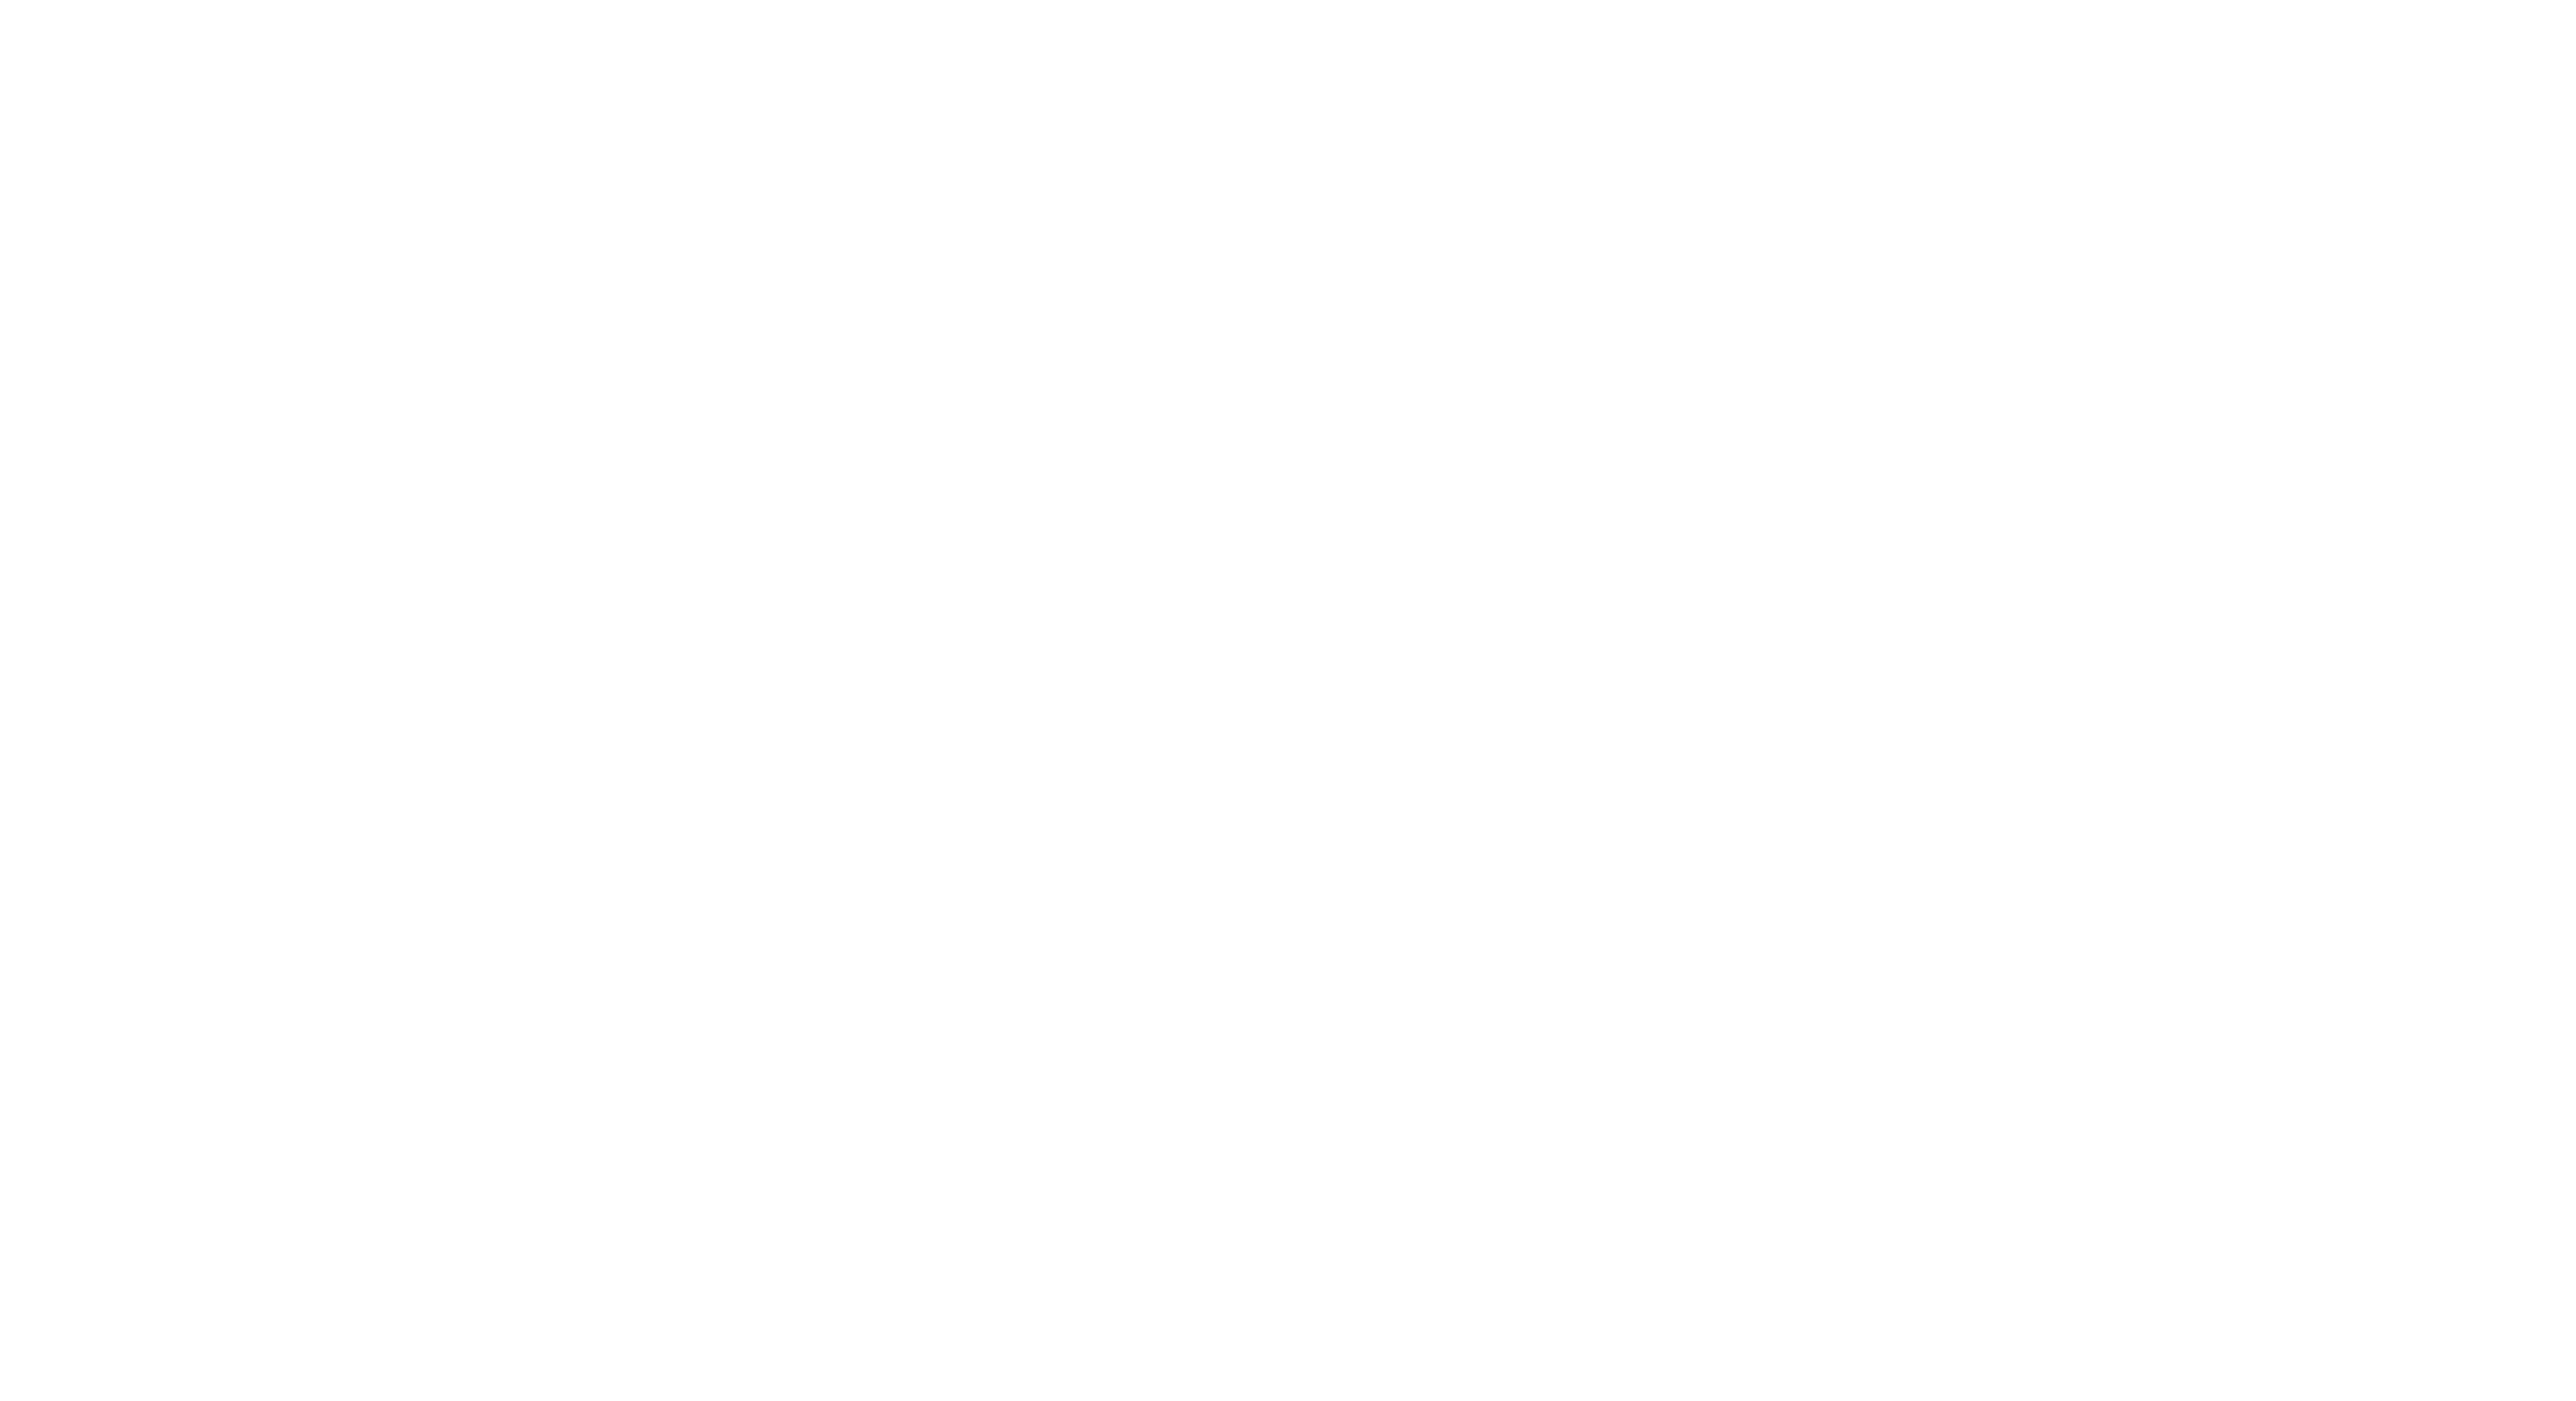 ISOQAR-9001+14001-Col-logos